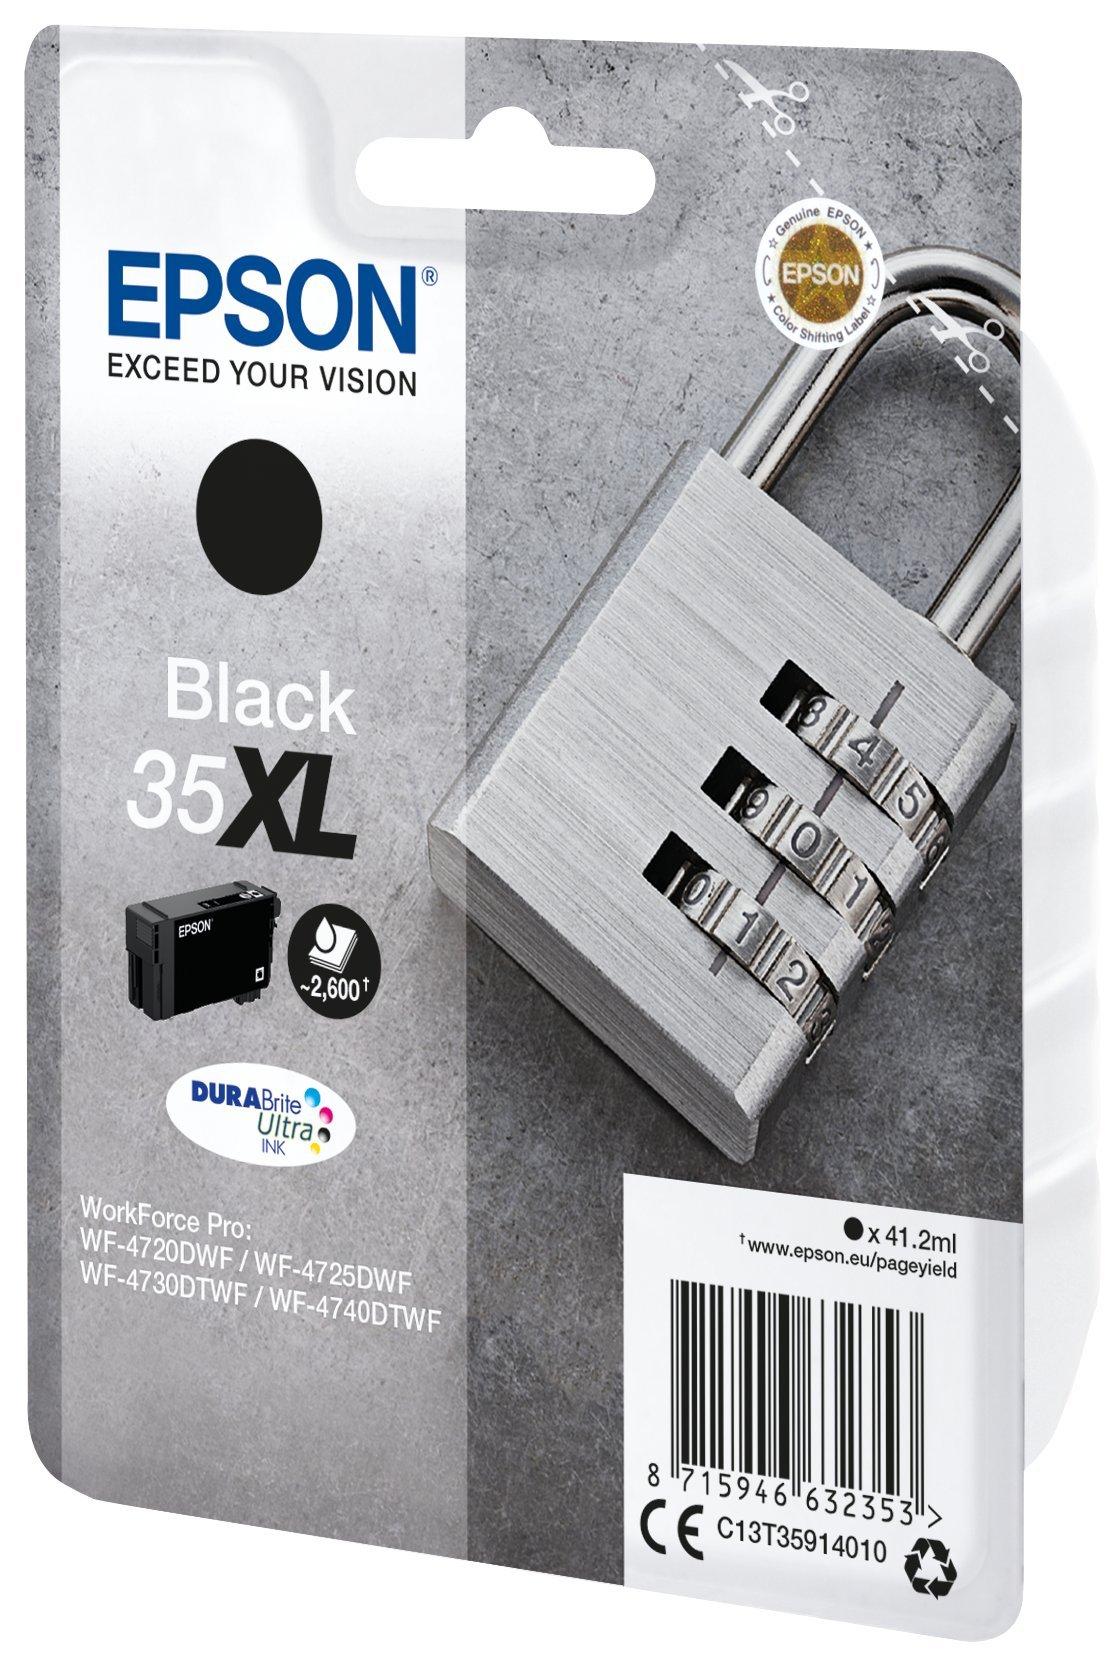 Epson 35XL MultiPack 